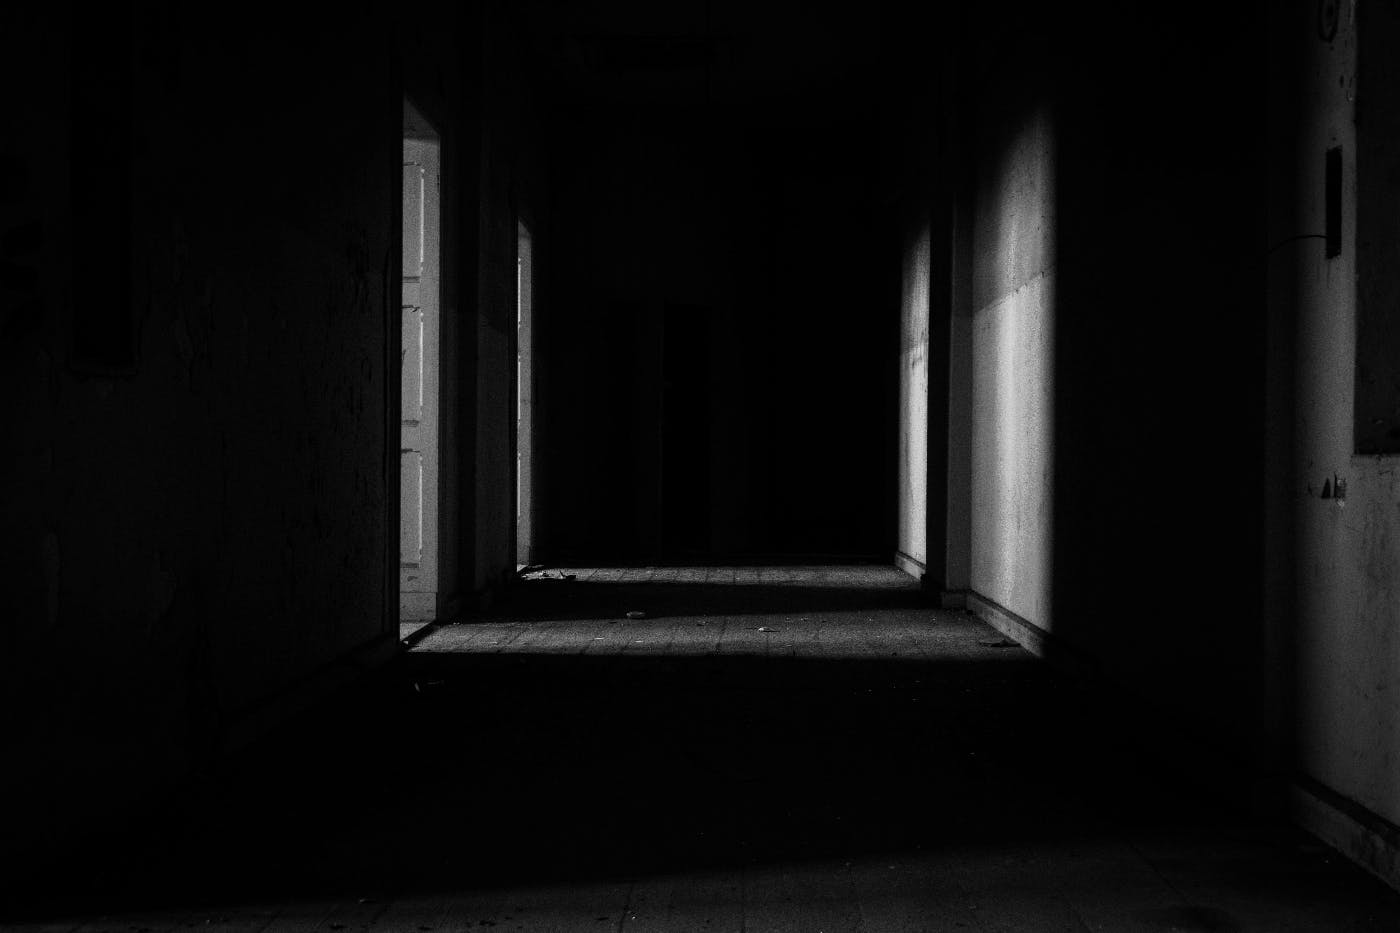 a dark hallway with light coming from open doors